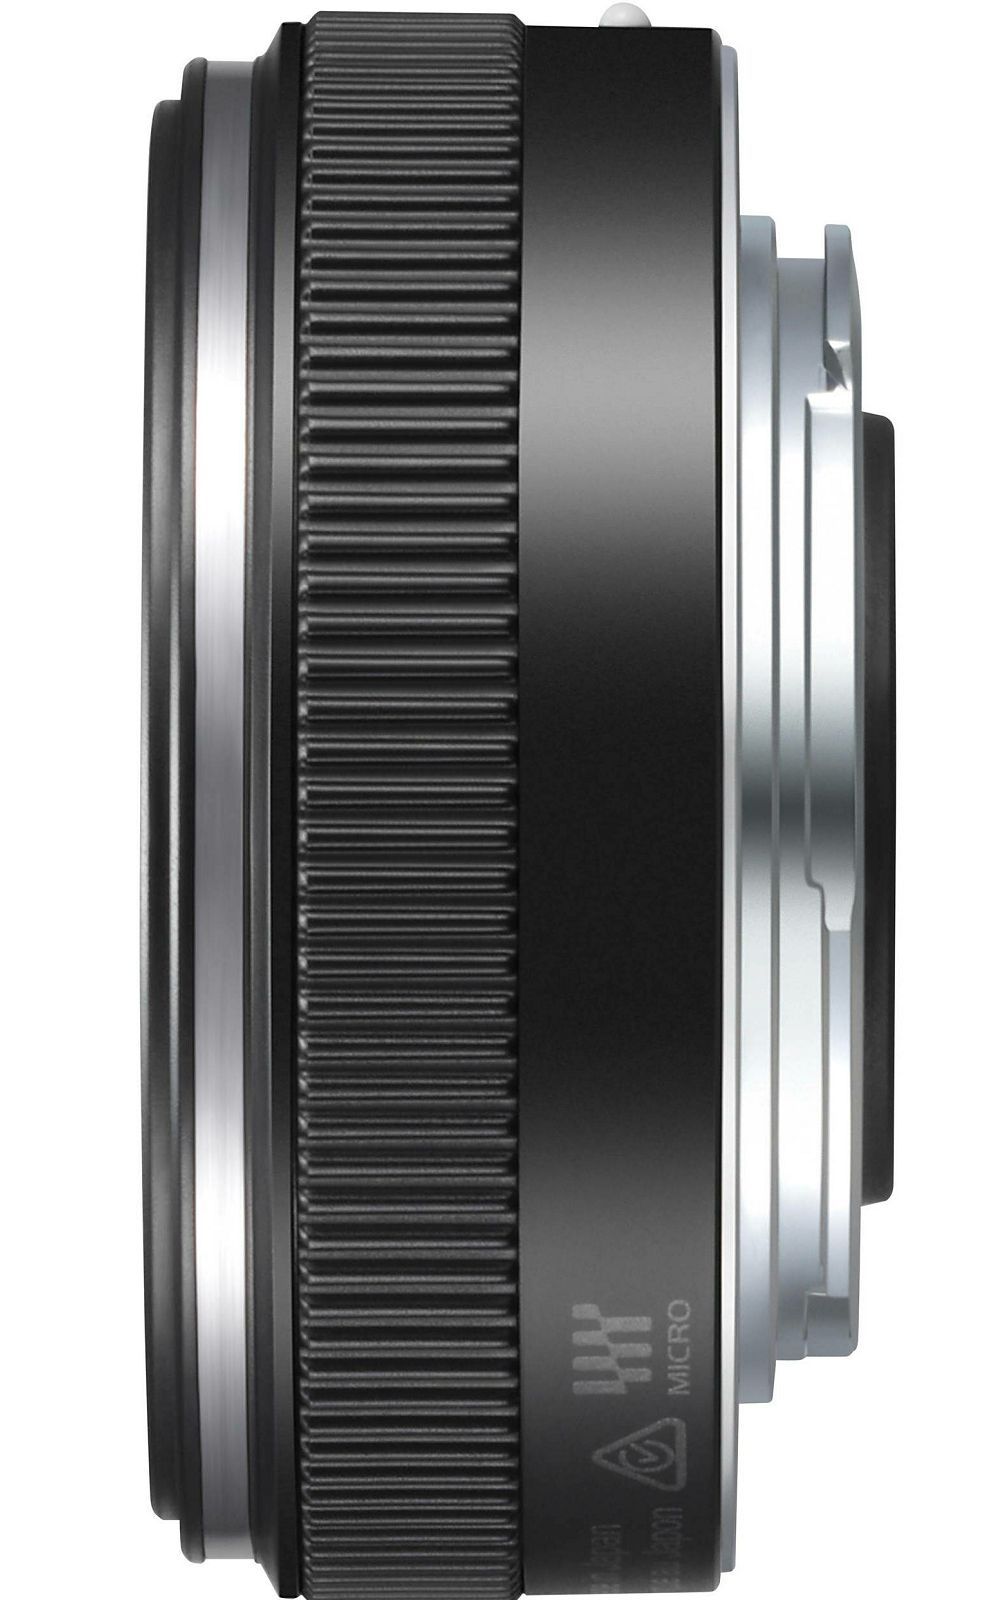 Panasonic 14mm f/2.5 II Asph Black Lumix G Pancake širokokutni objektiv za Micro Four Thirds MFT micro4/3" H-H014AE H-H014A (H-H014AE-K)